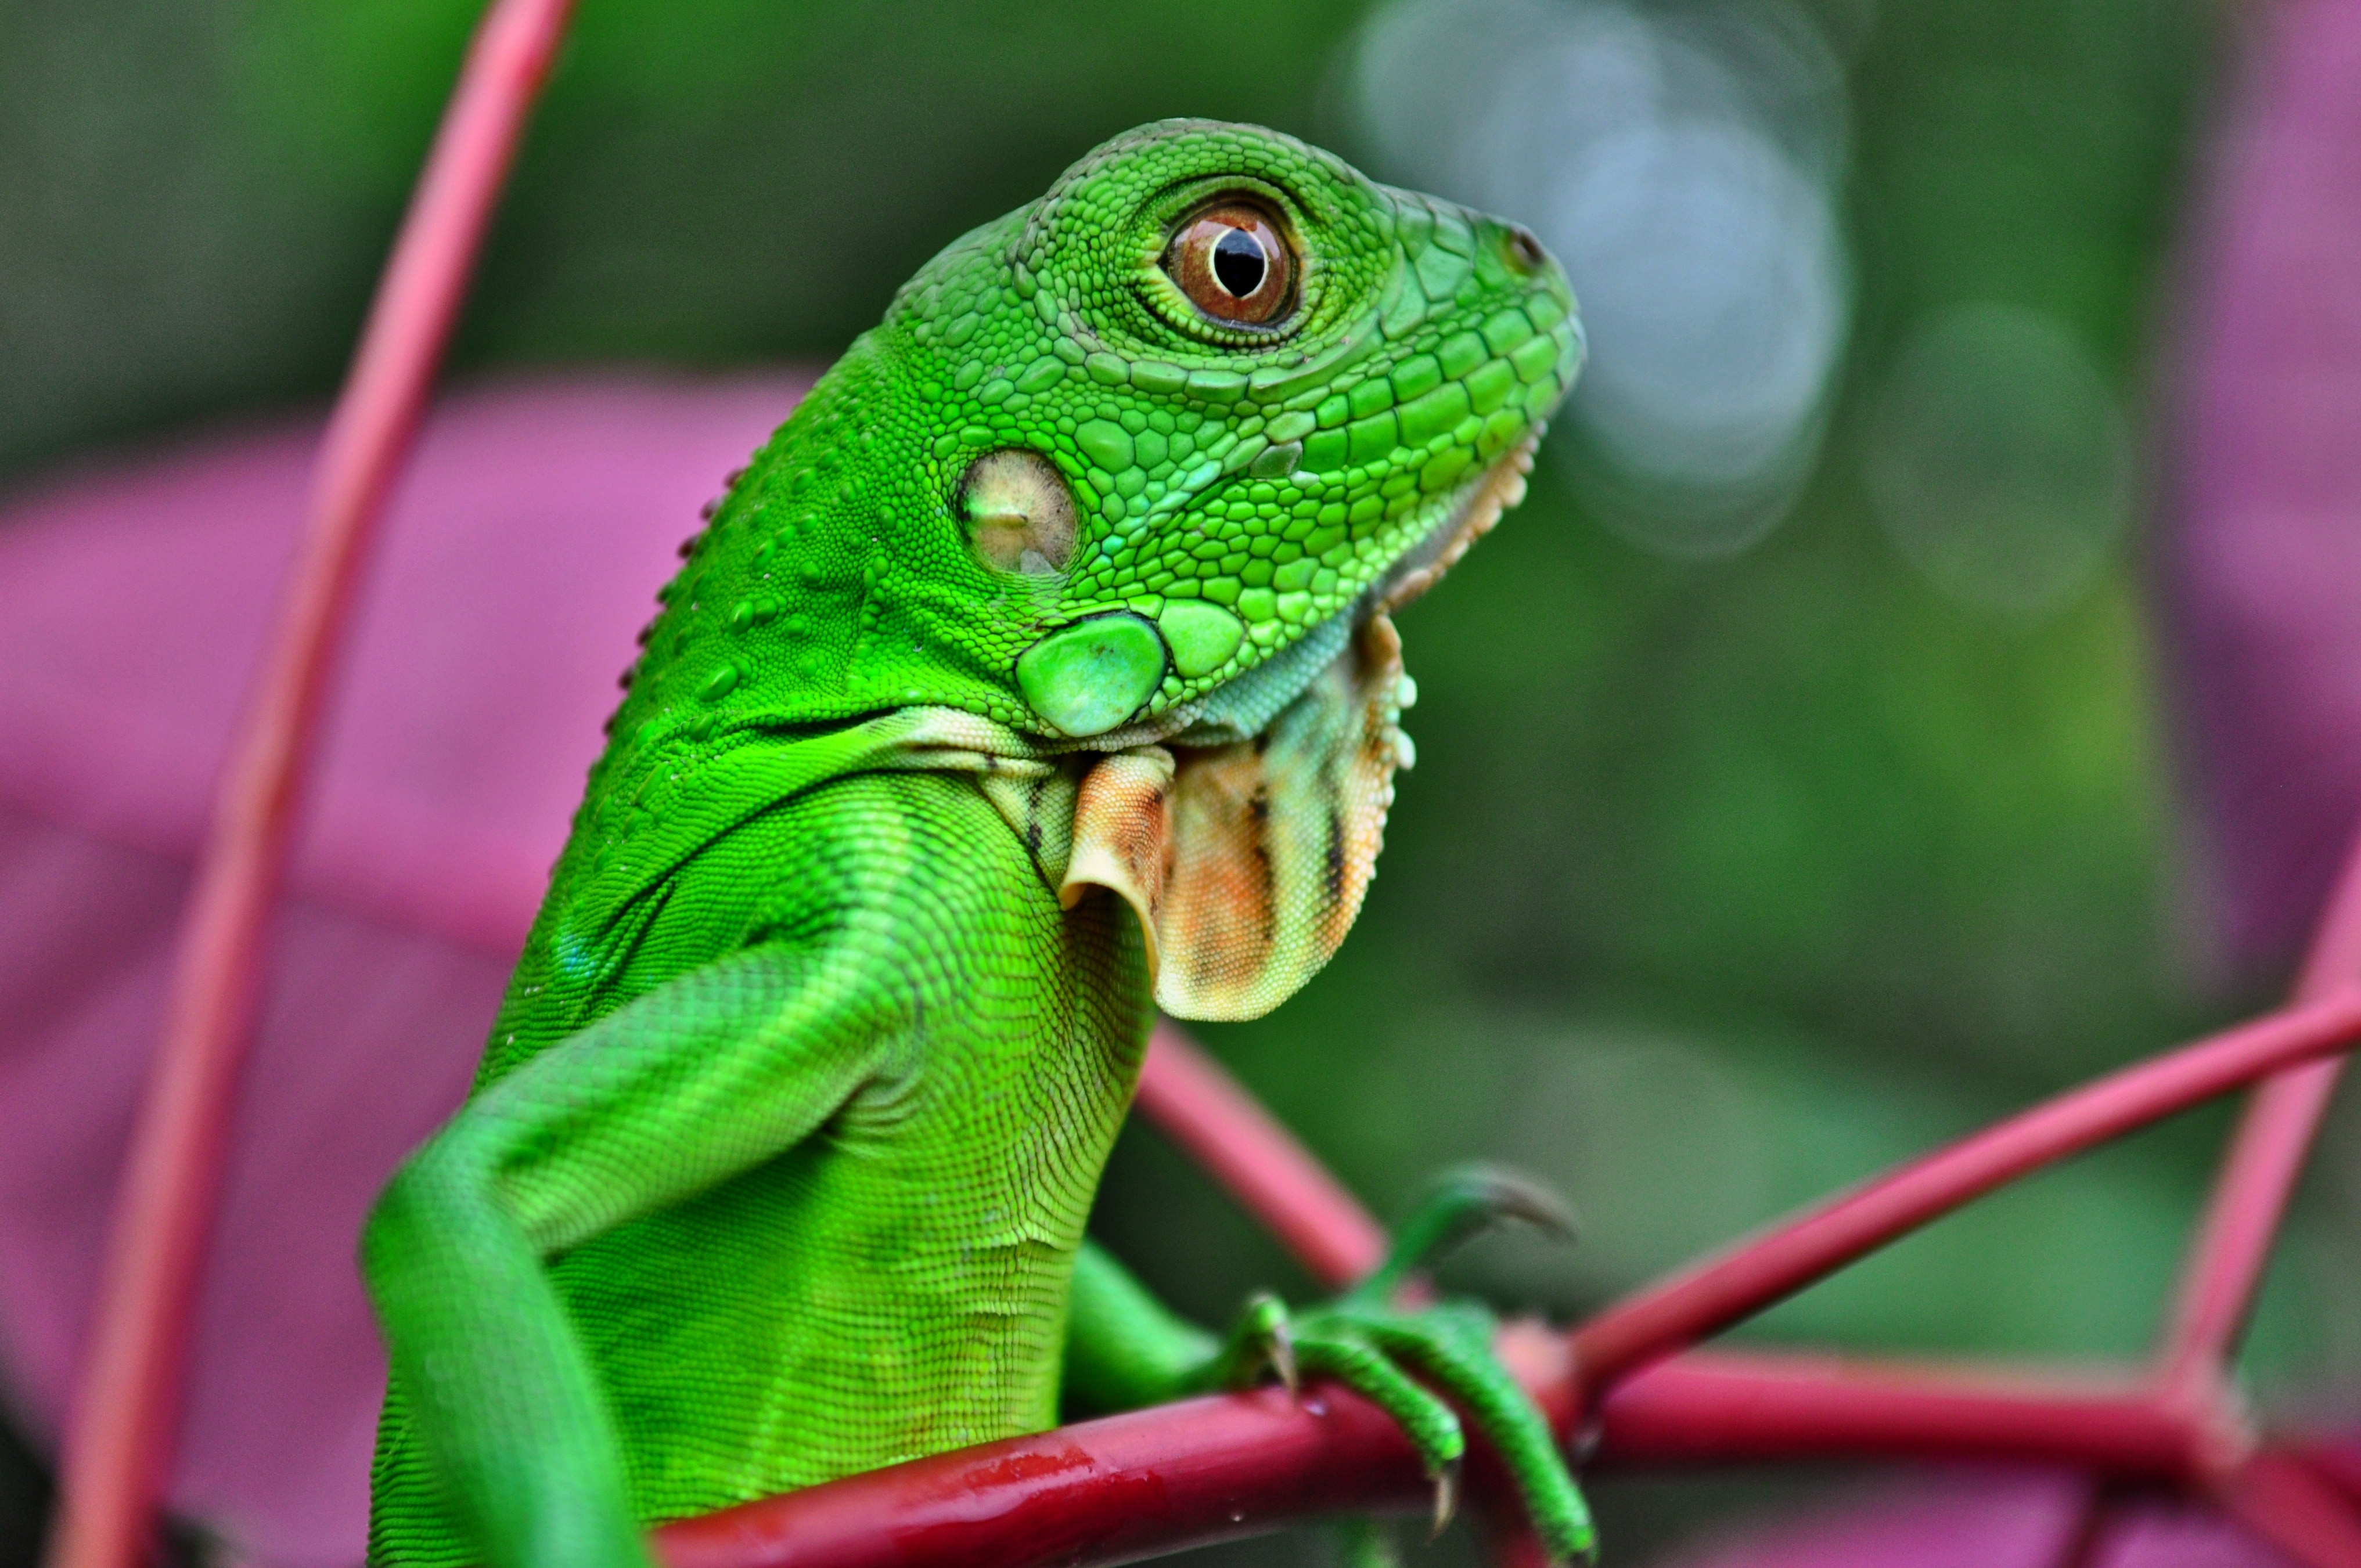 Reptiles, Reptile, Nature, Green, Iguana, green color, one animal